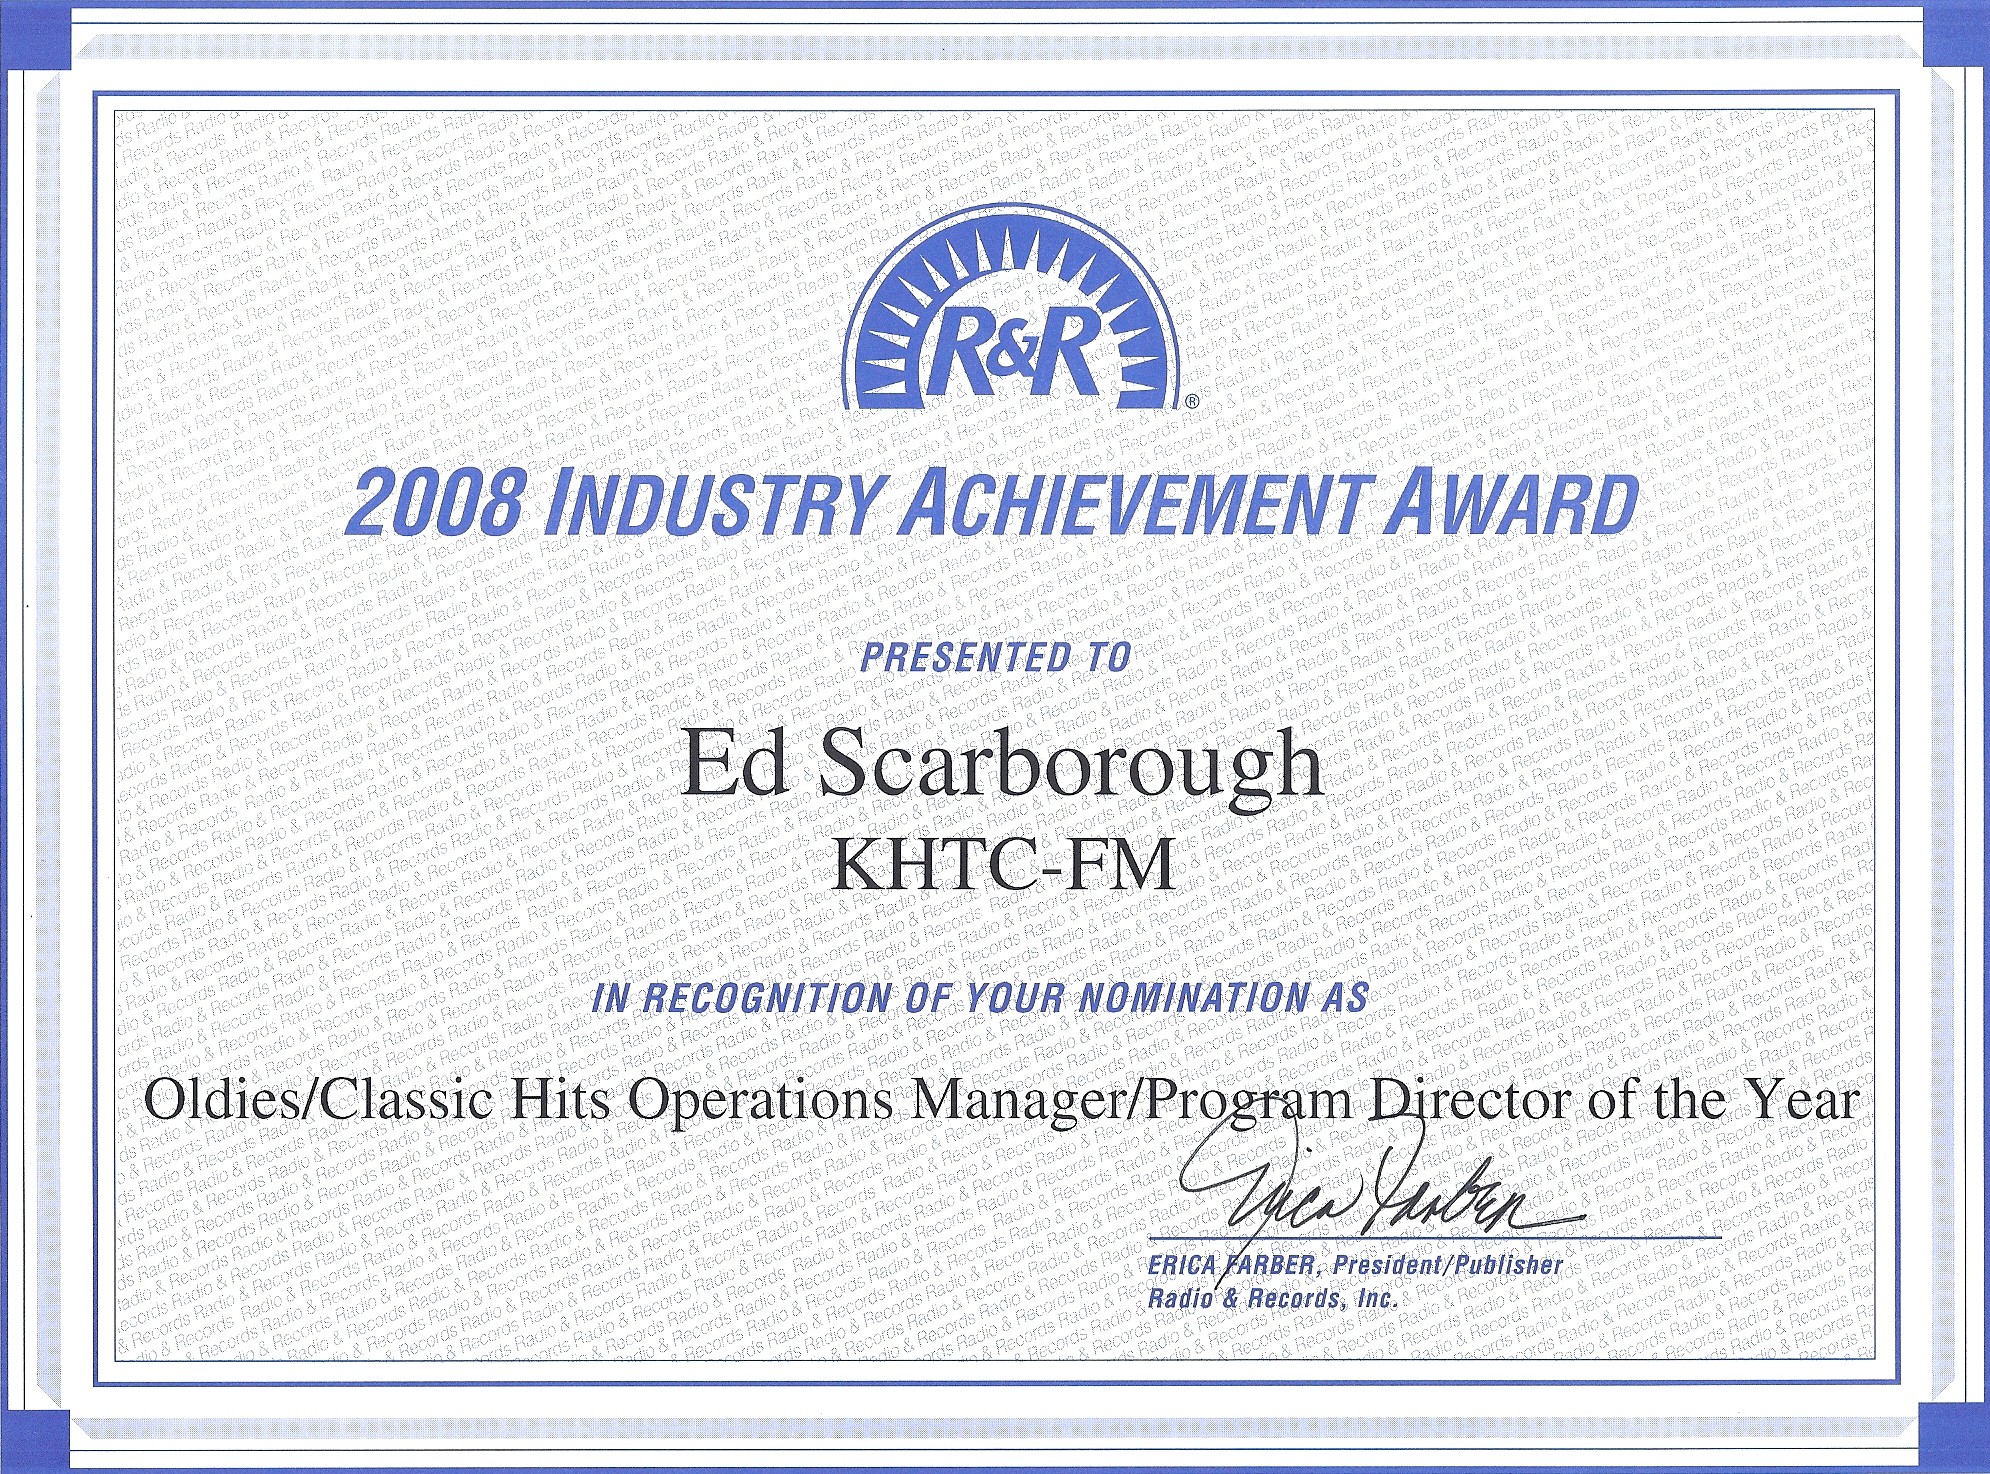 2008 Radio & Records Industry Achievement Award